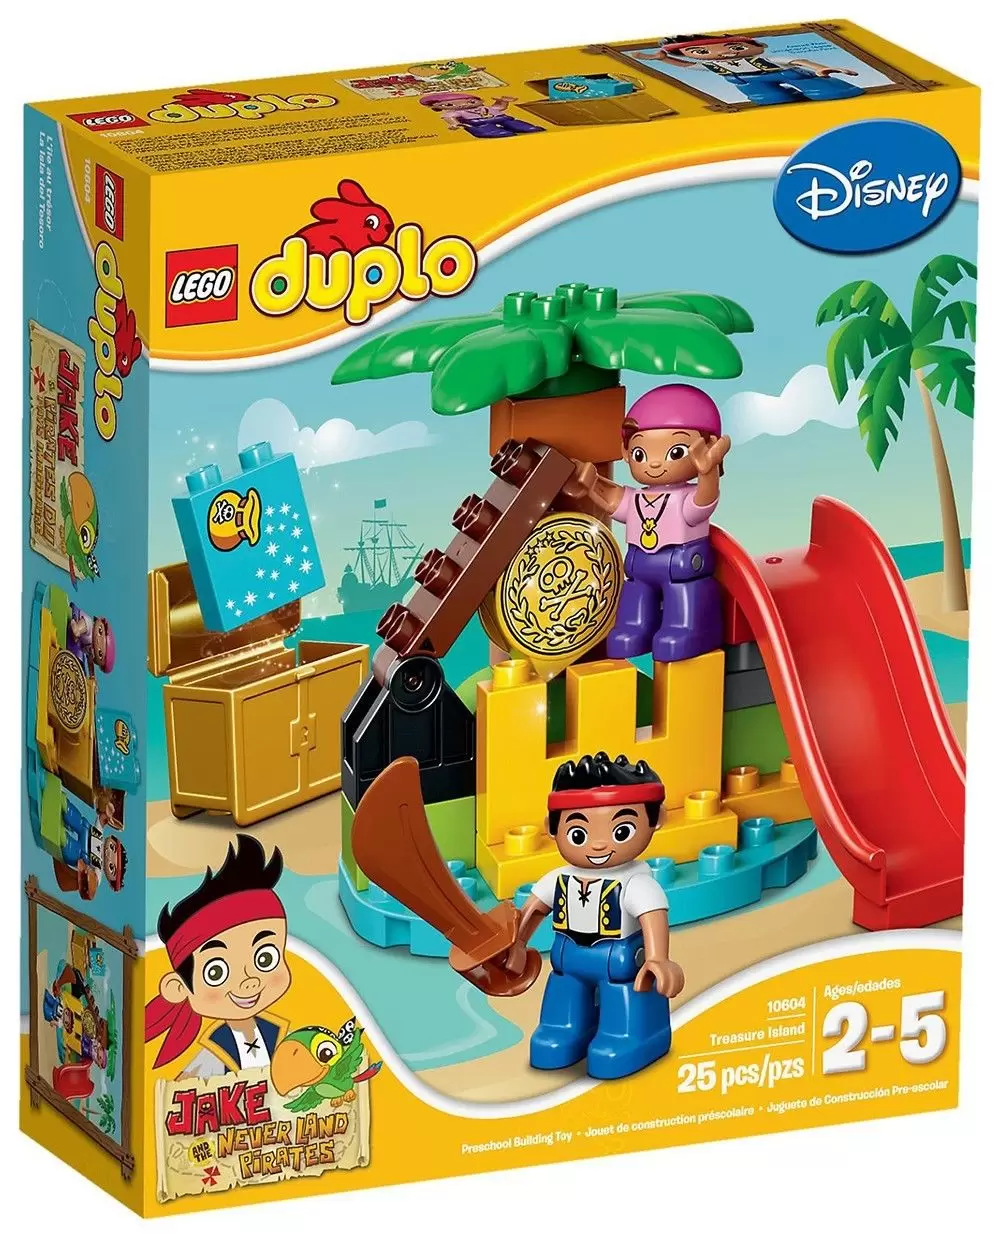 LEGO Duplo - Jake and the Never Land Pirates Treasure Isla